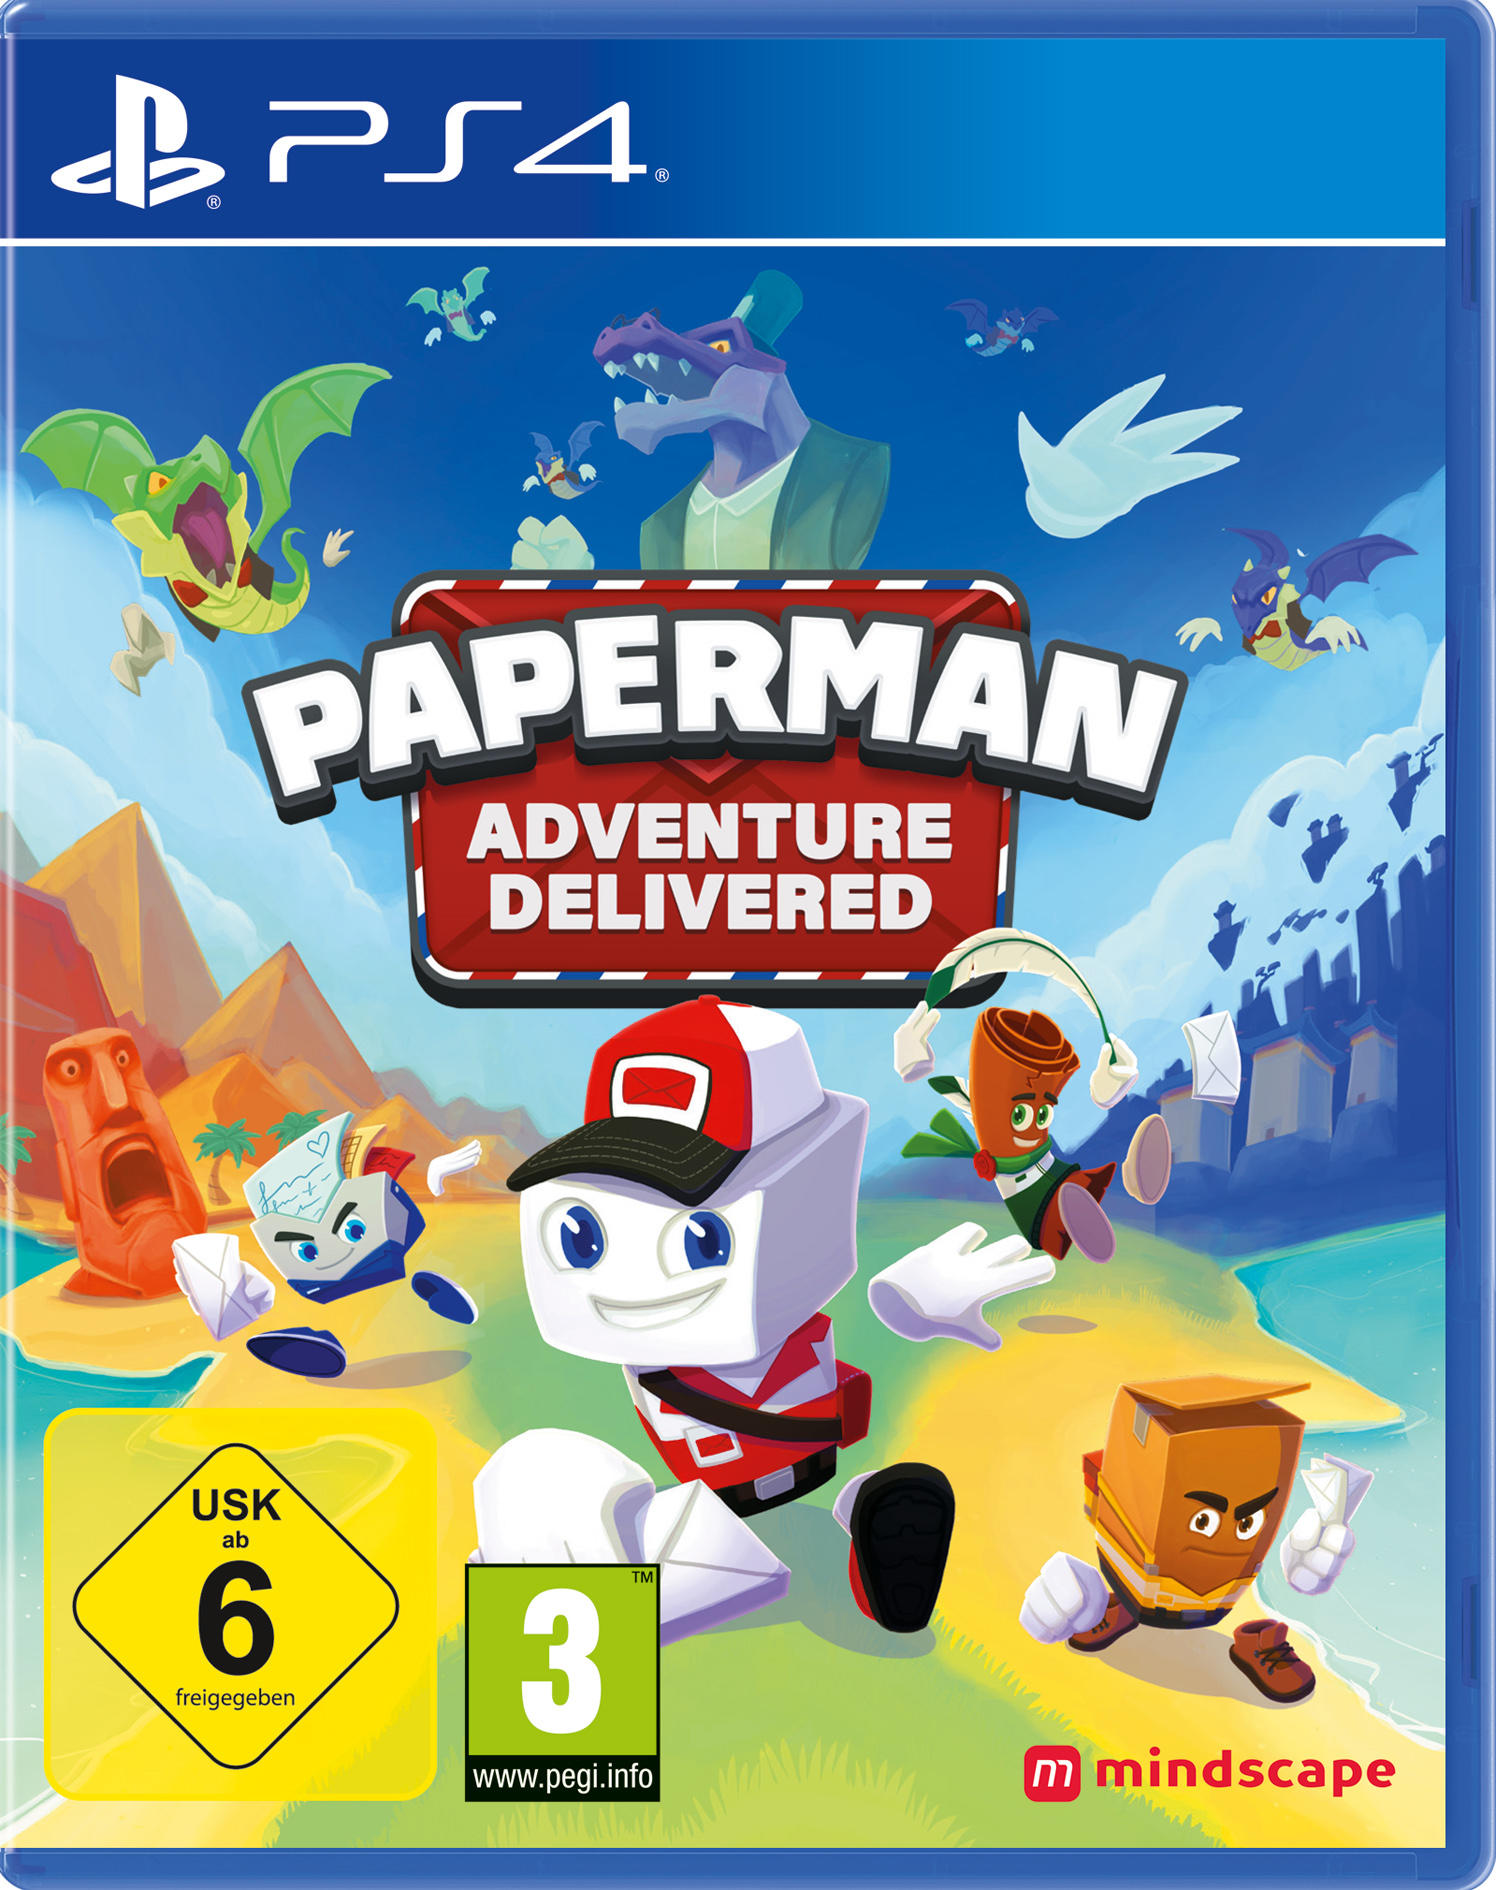 Paperman: [PlayStation - 4] Delivered Adventure